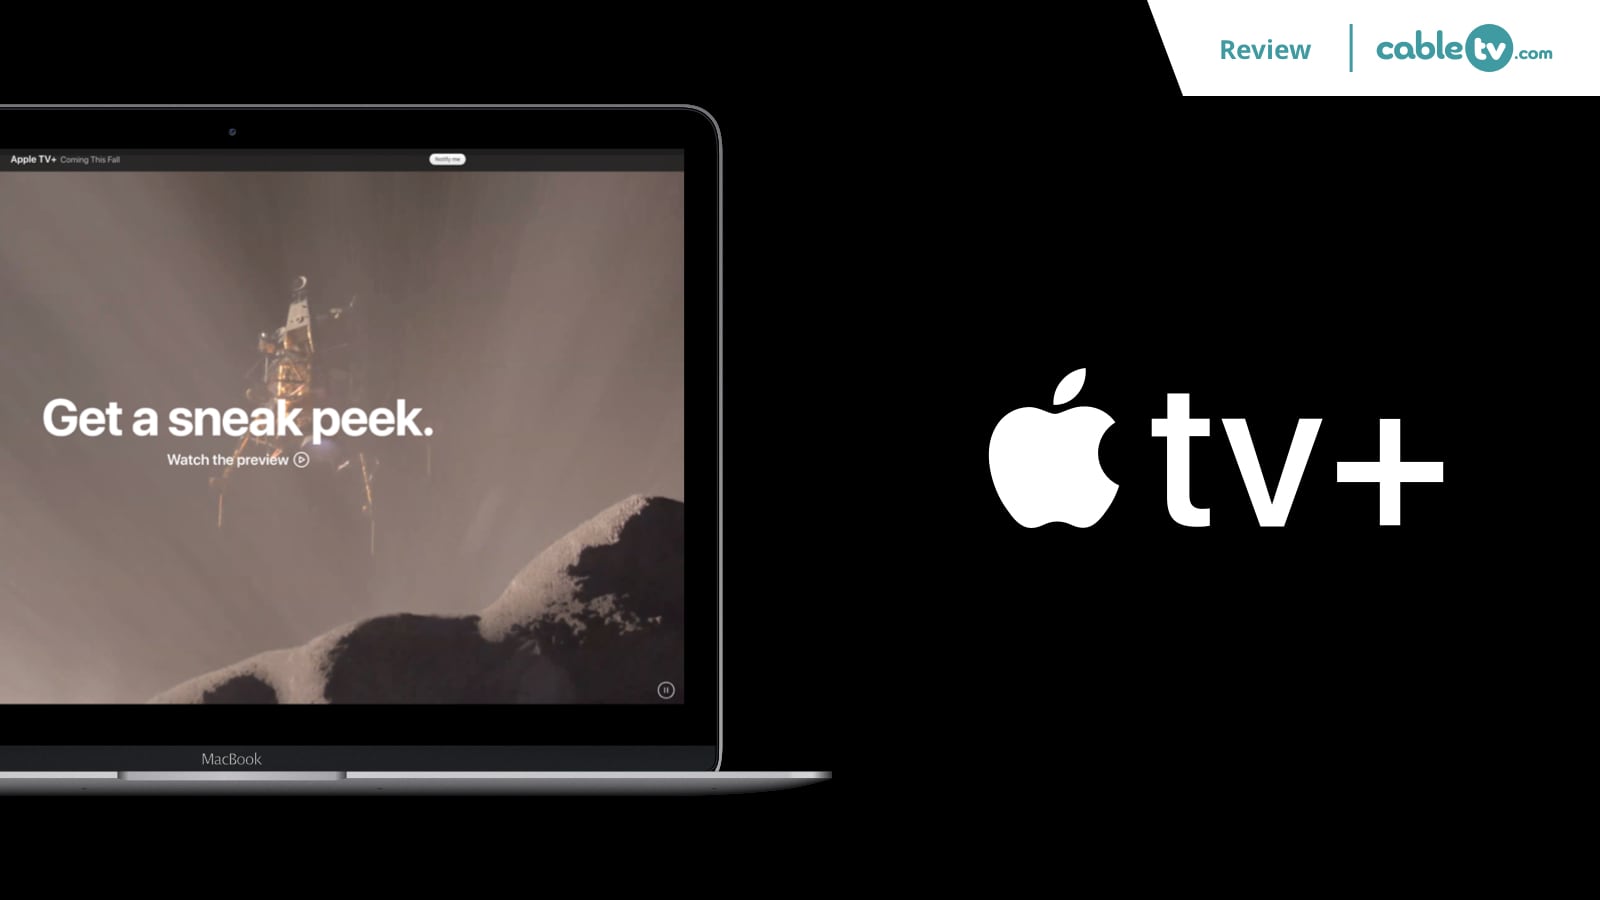 Apple TV+ Review on CableTV.com